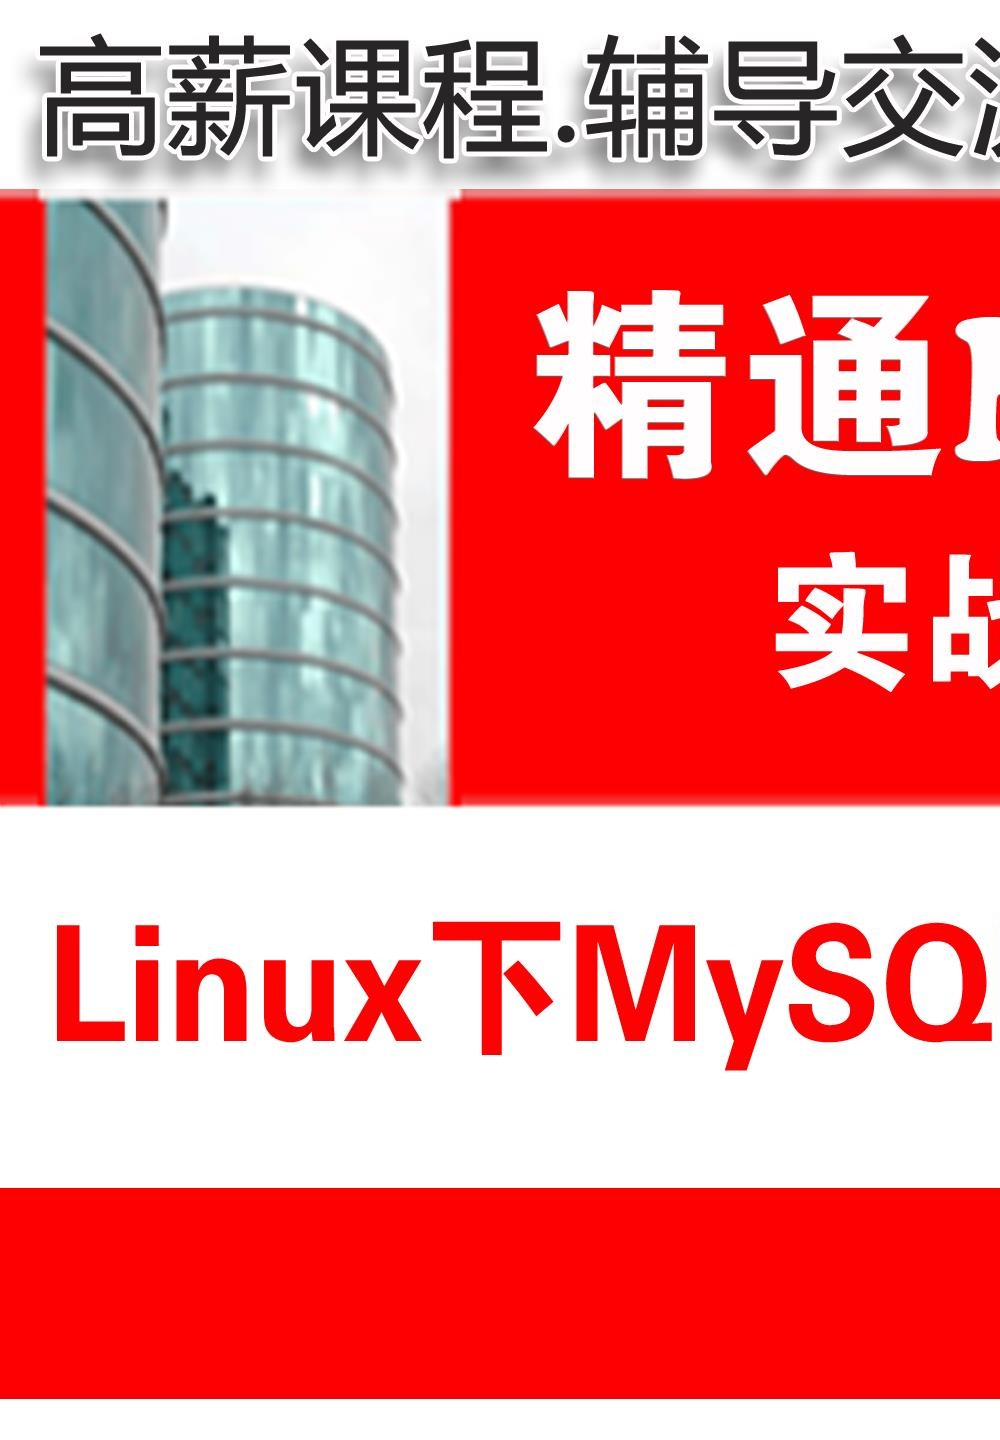 Linux平台MySQL安装配置与管理入门_MySQL数据库基础与项目实战03